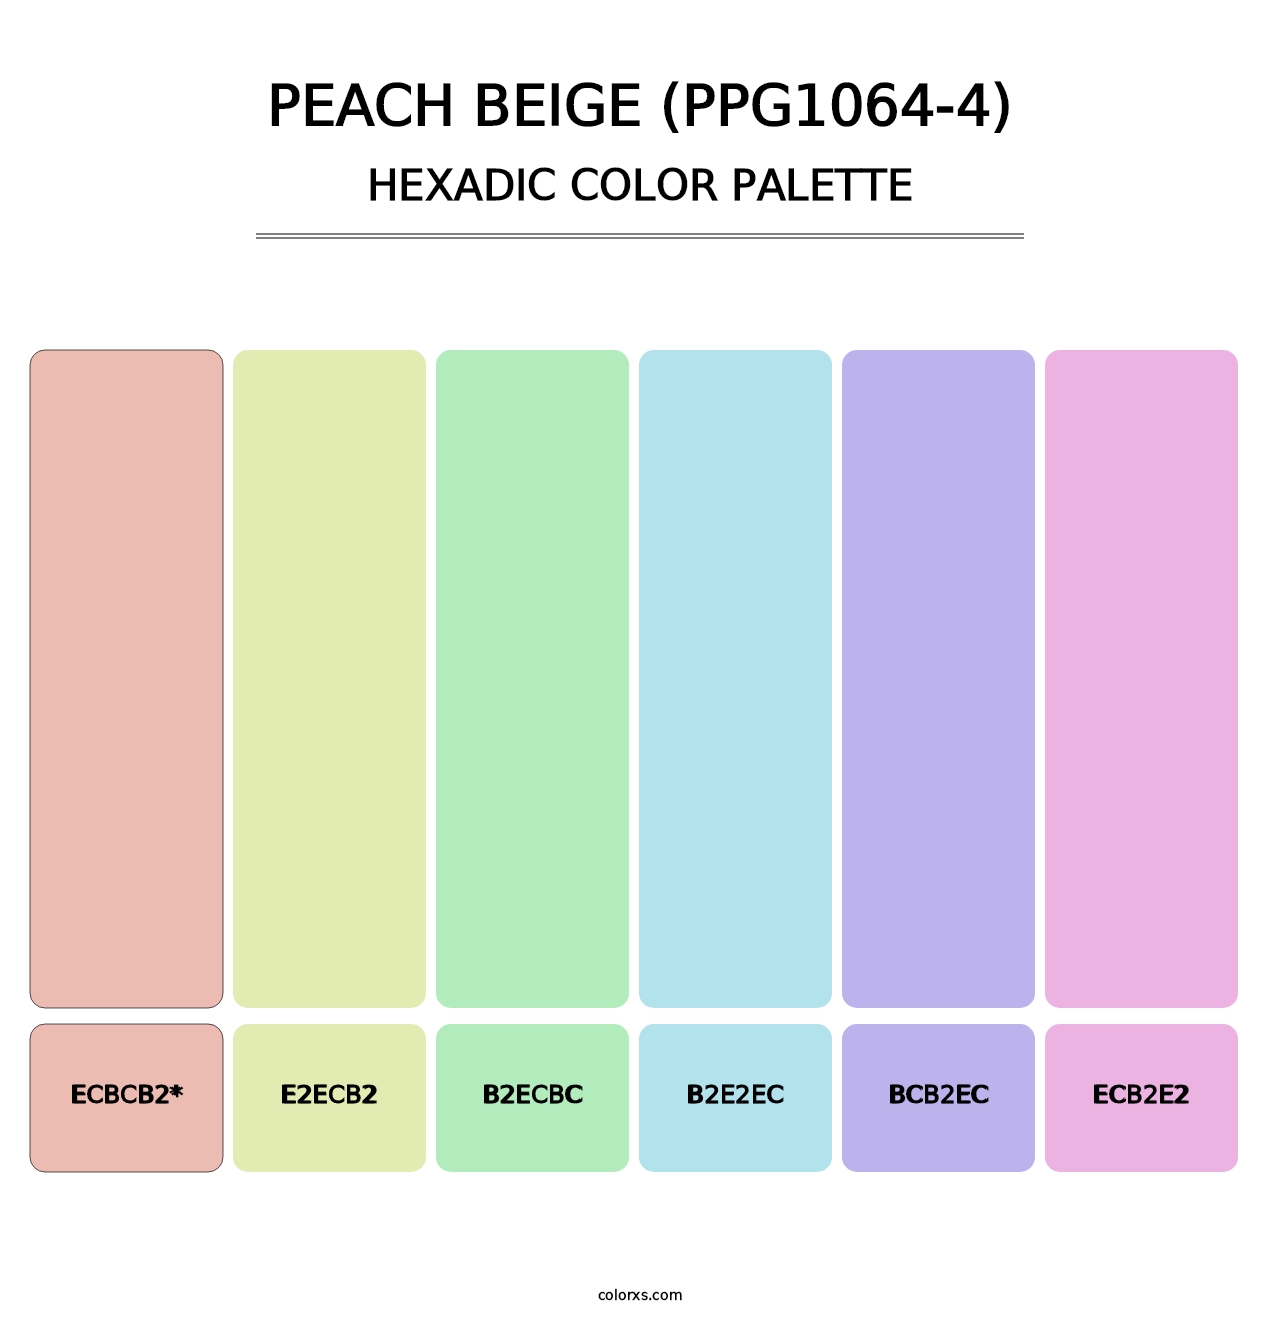 Peach Beige (PPG1064-4) - Hexadic Color Palette